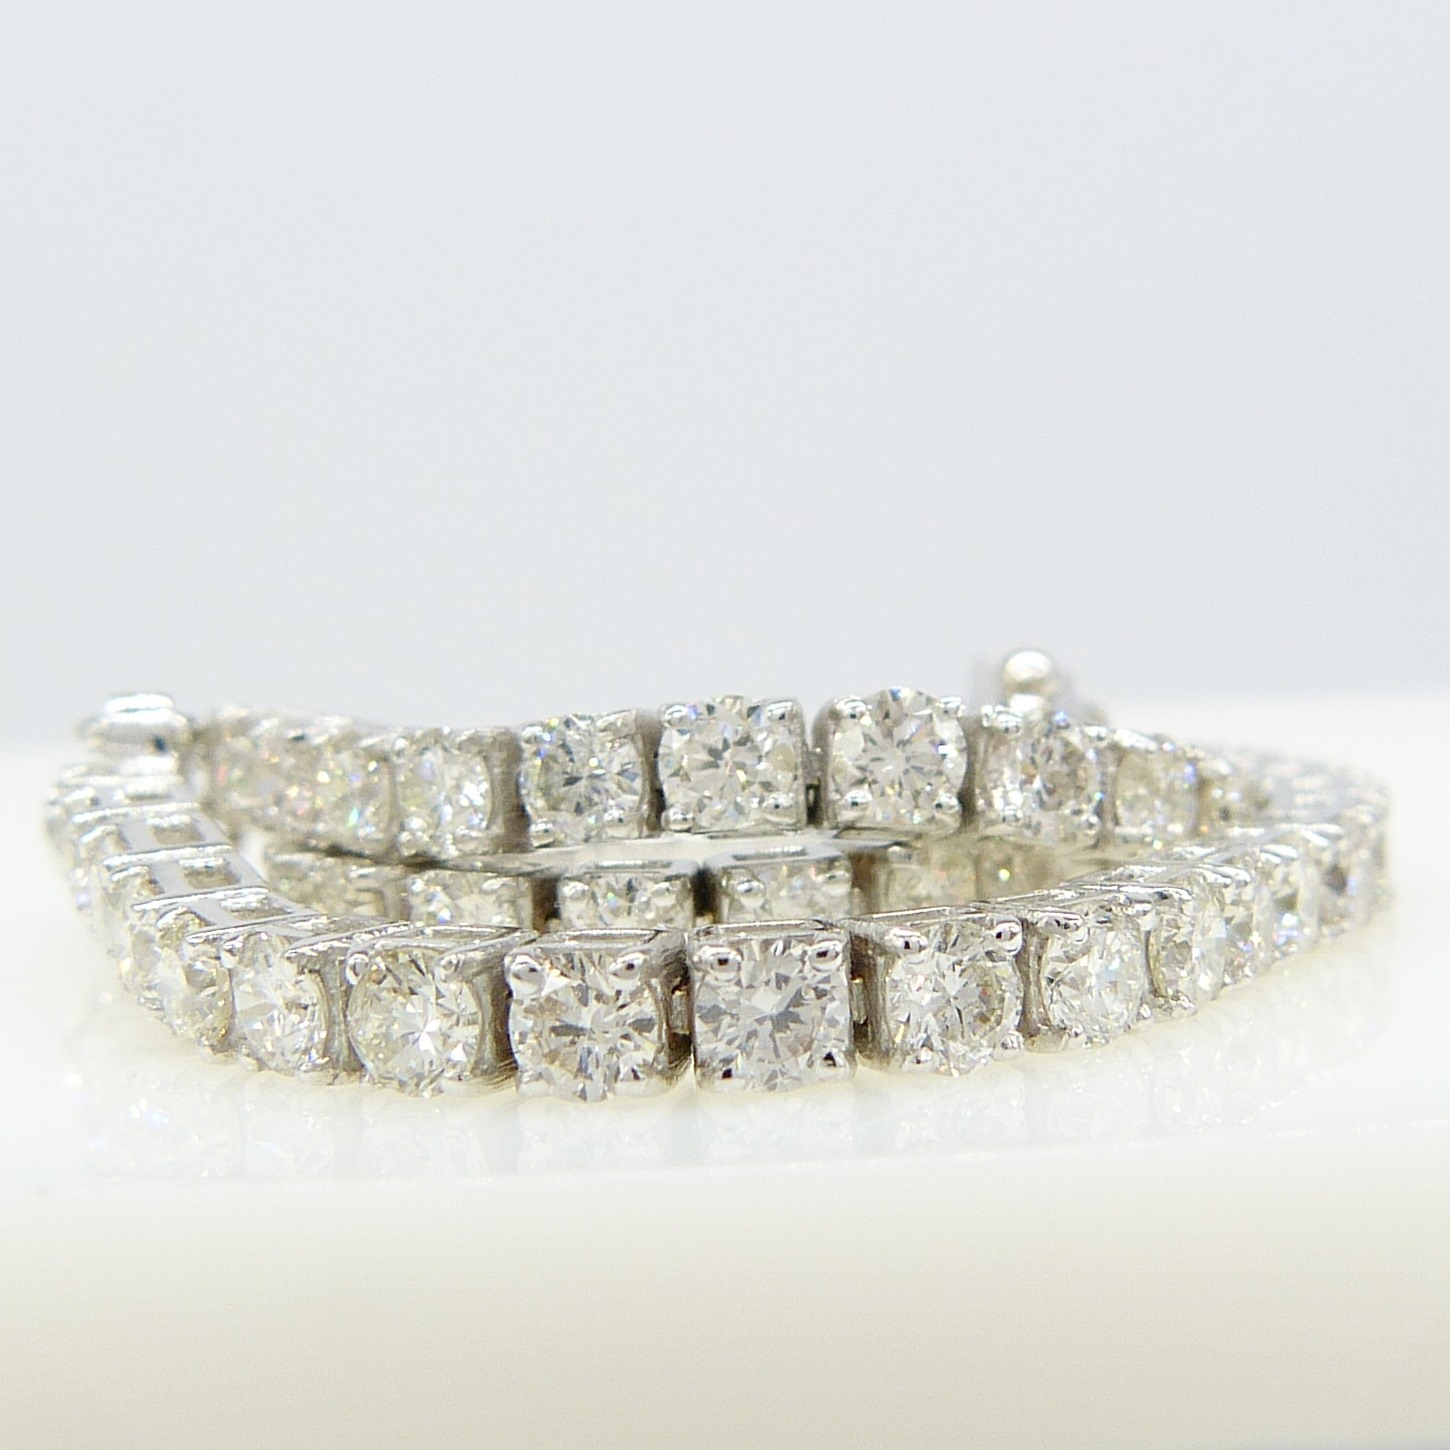 4.10 Carat Round Brilliant-cut Diamond Line Bracelet In 18ct White Gold, Boxed - Image 3 of 7